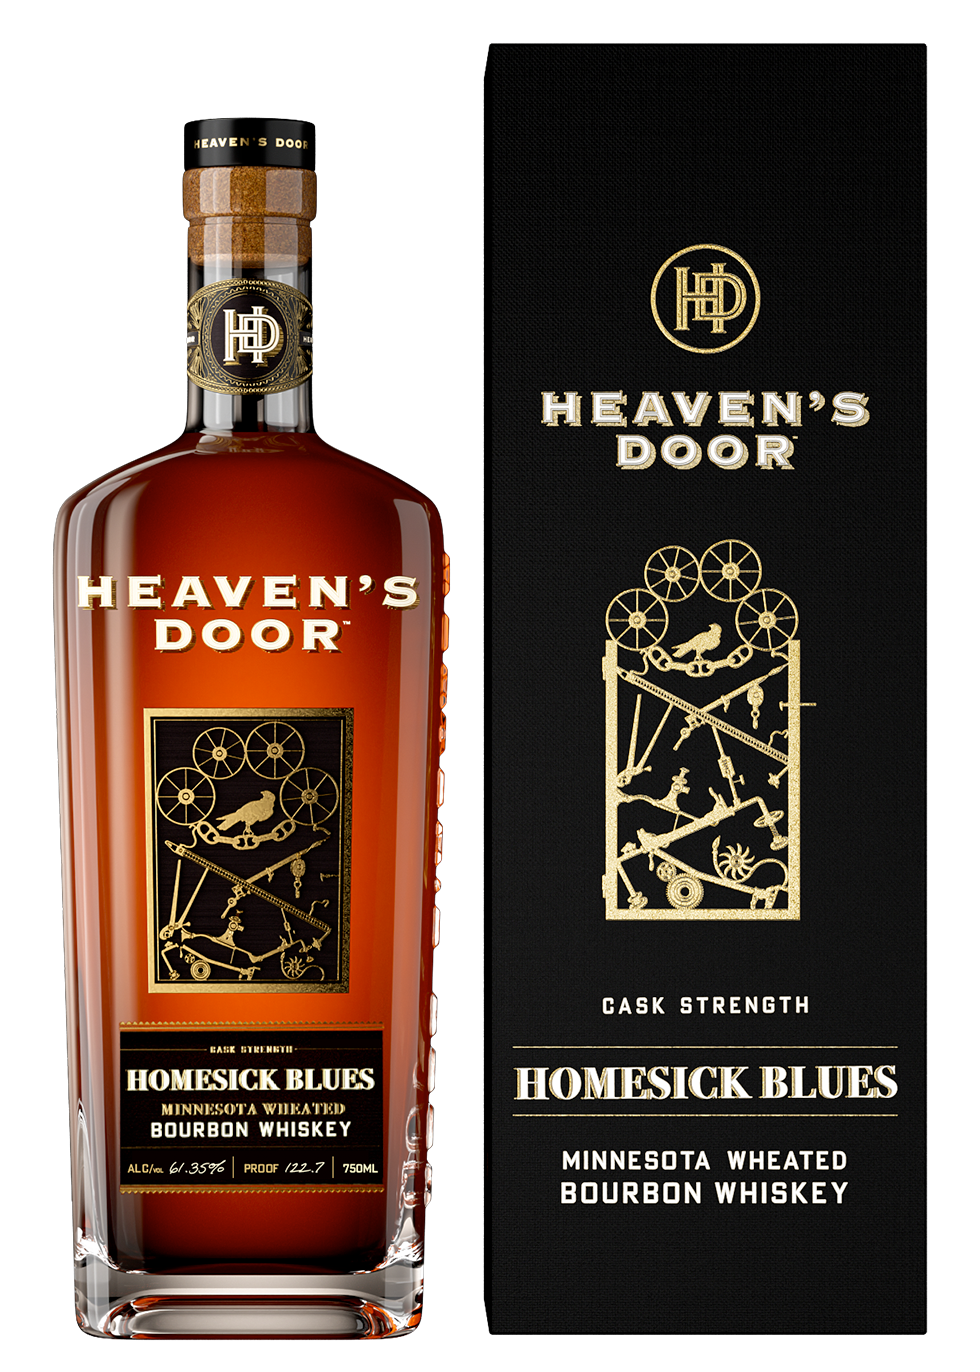 Homesick Blues Minnesota Wheated Bourbon Whiskey – Heaven's Door